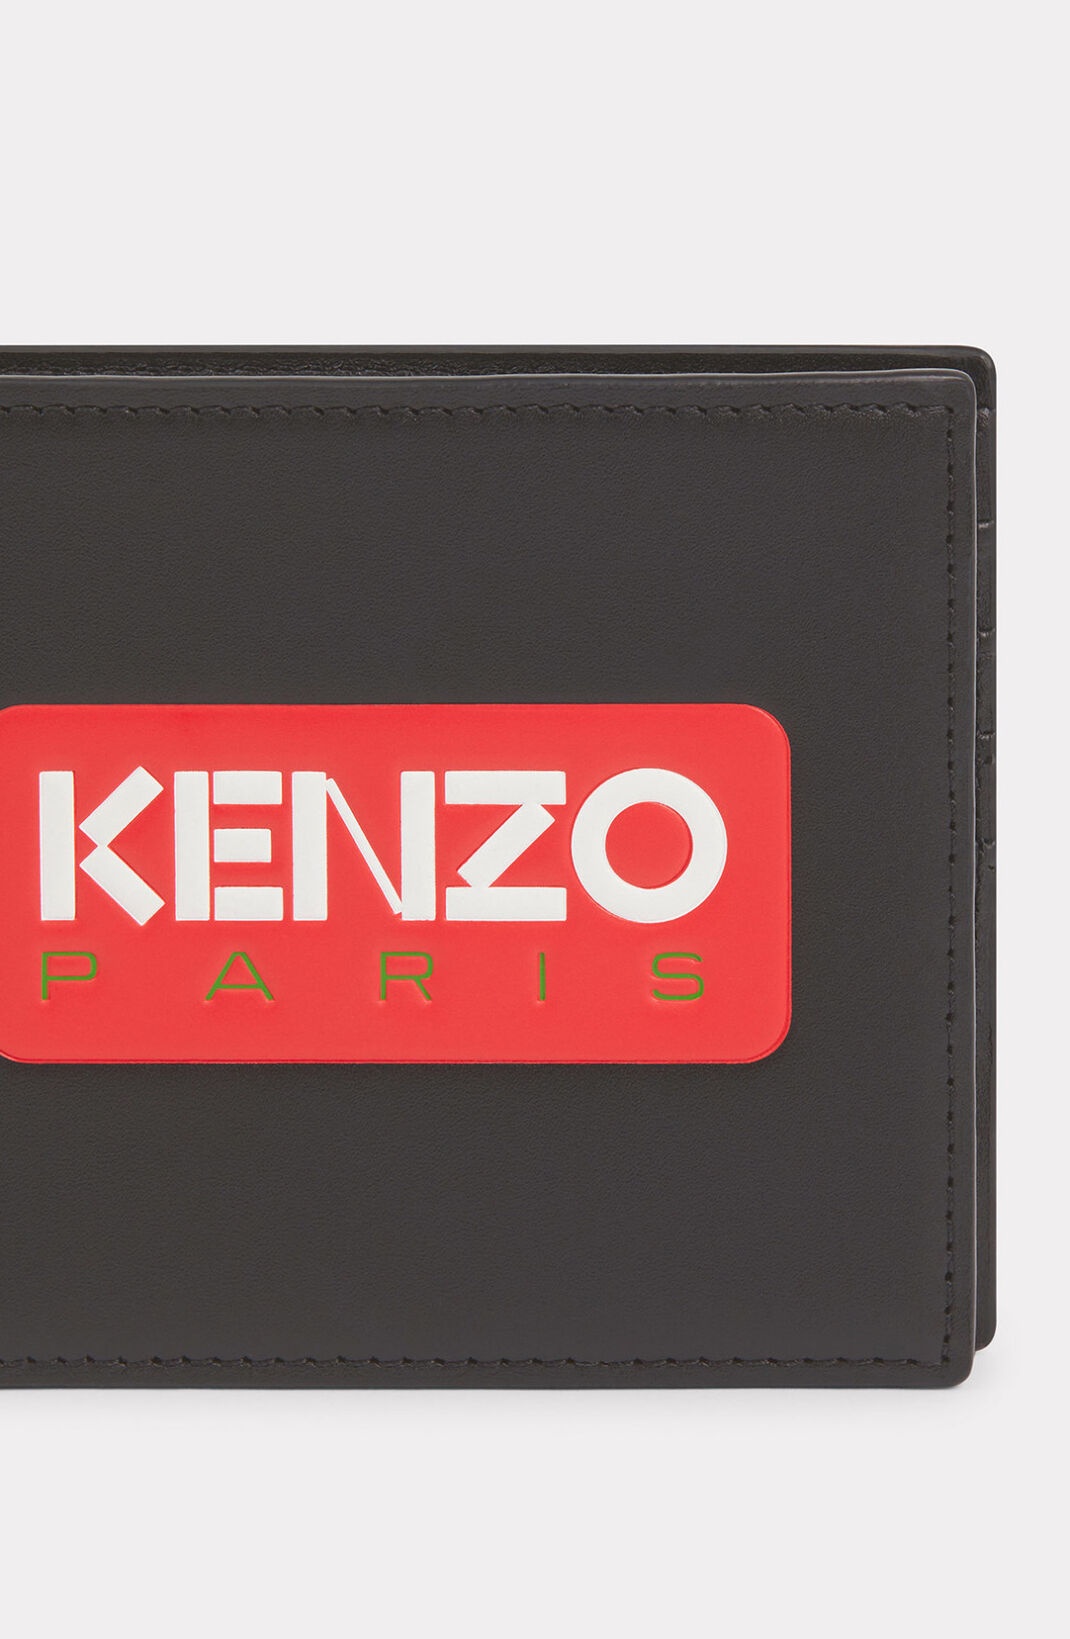 KENZO Paris leather wallet - 3